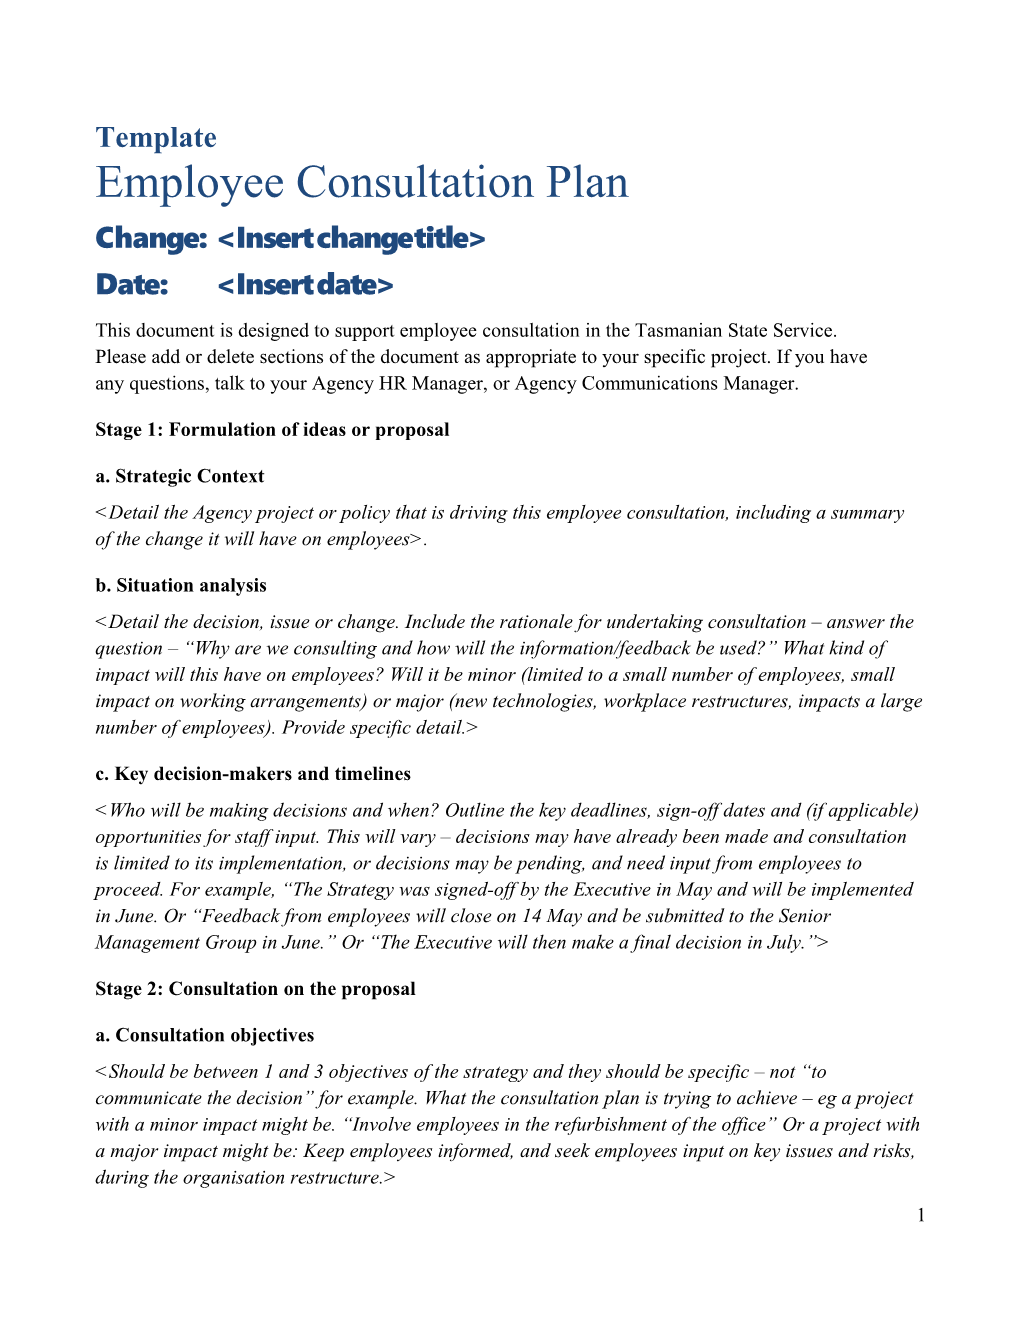 Employee Consultation Plan